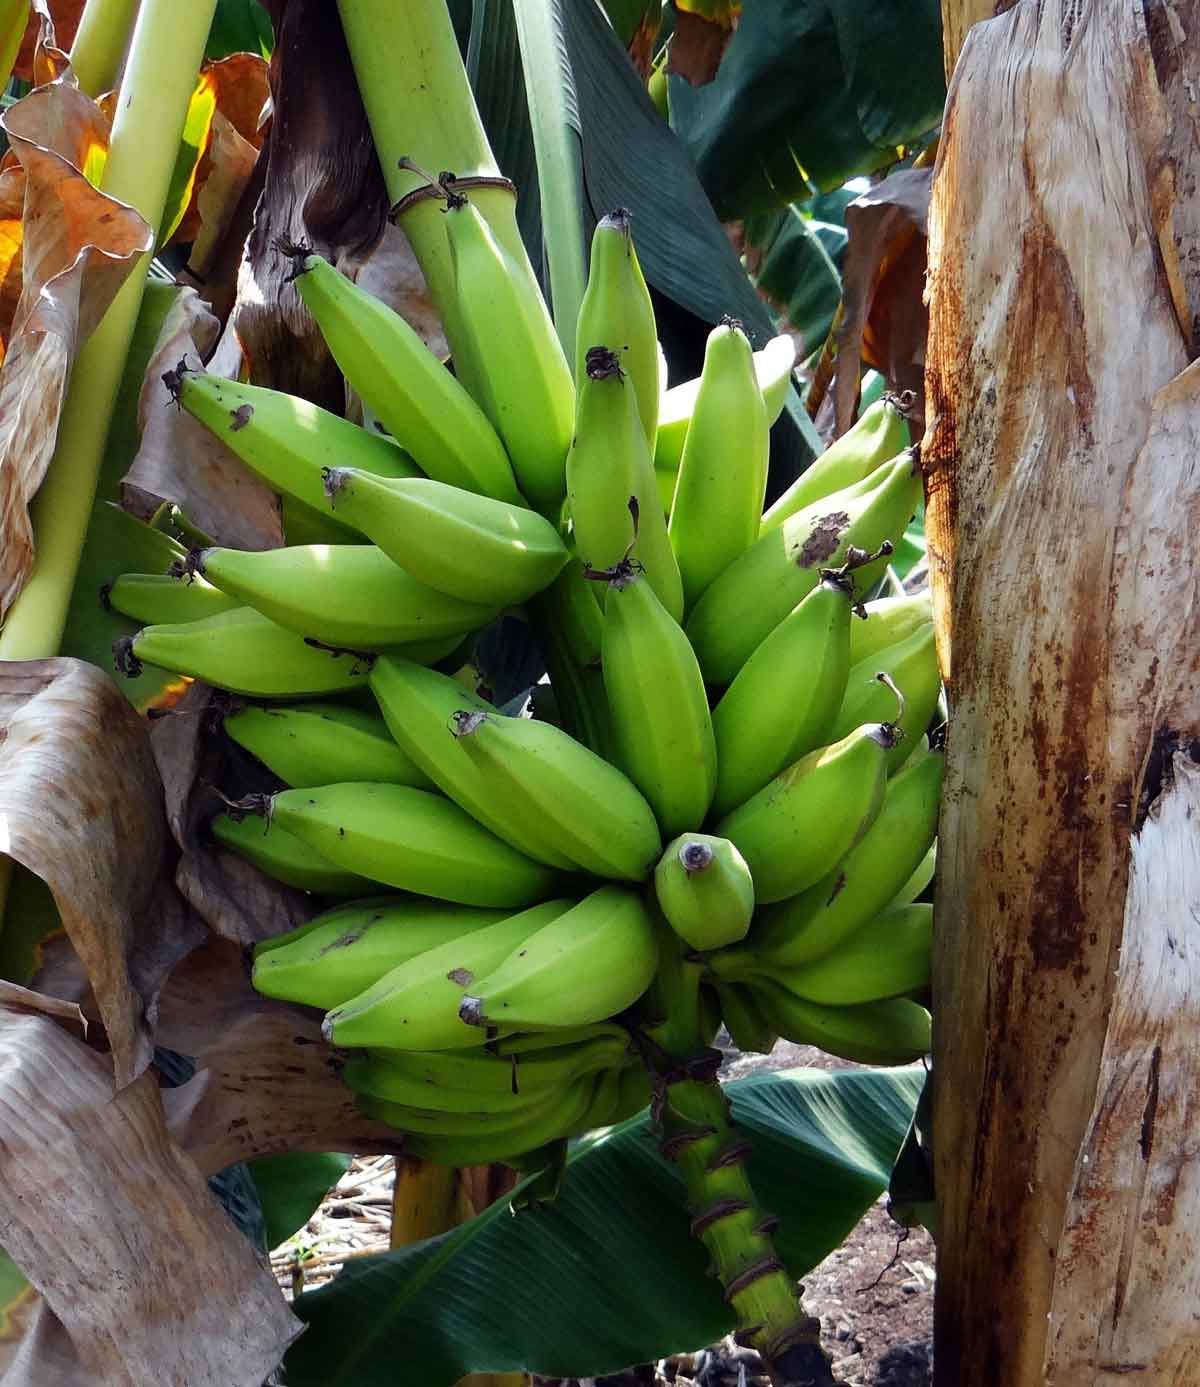 Matoke Green Bananas in Kenya